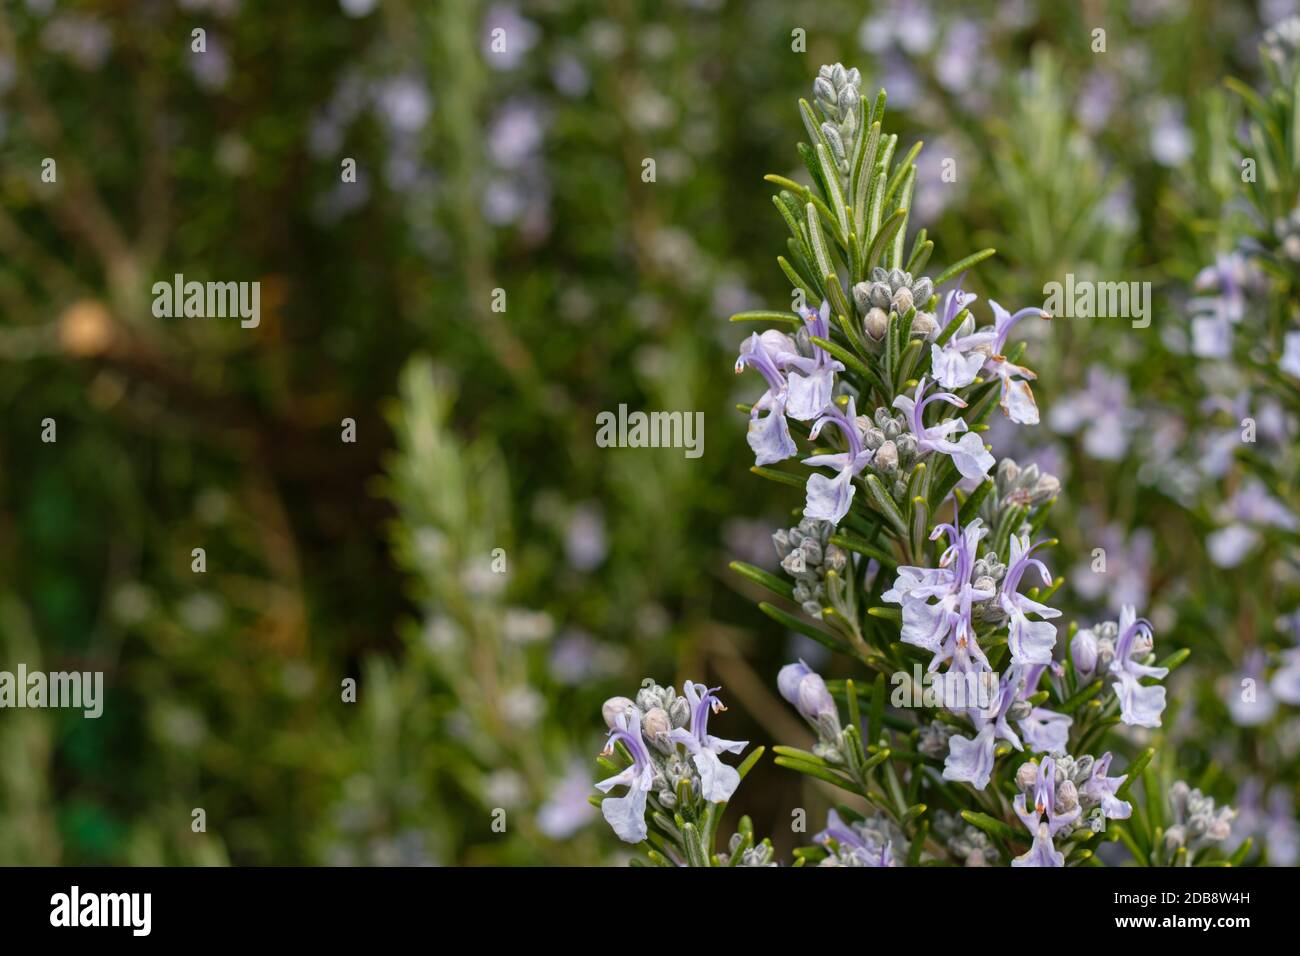 Rosemary (Rosmarinus officinalis) with purple flowers close-up Stock Photo